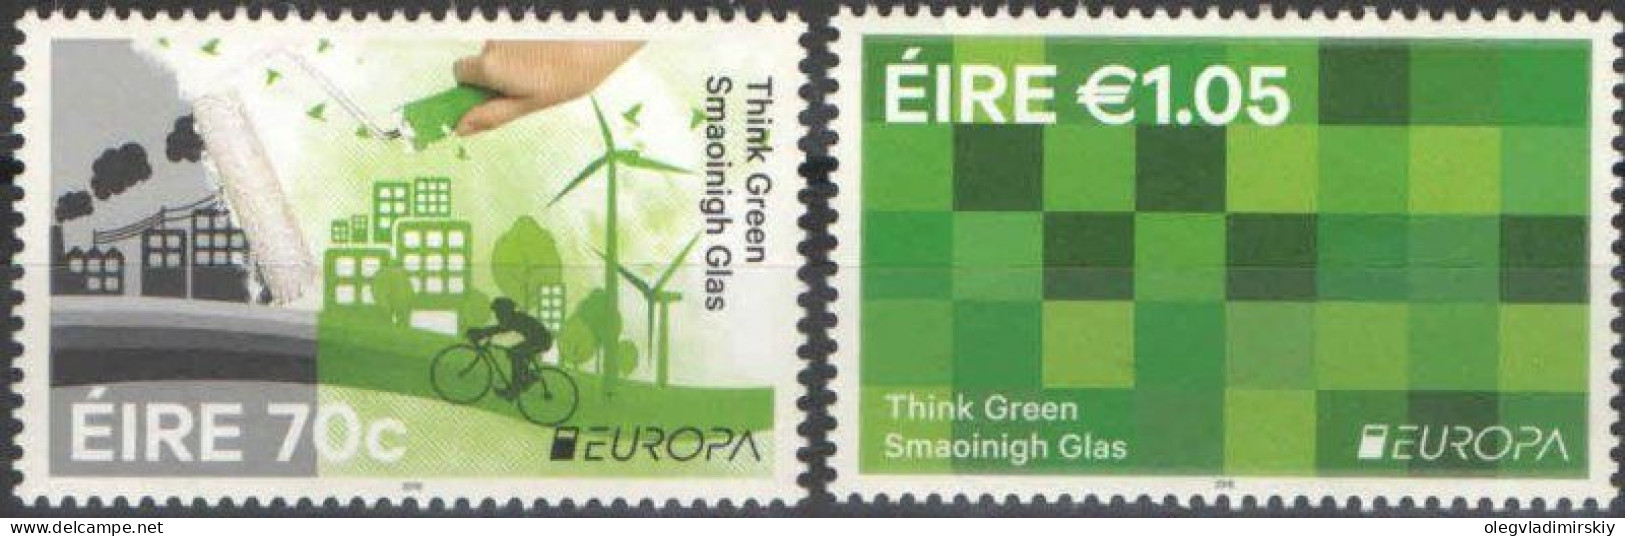 Ireland Irland Irlande 2016 Europa CEPT Think Green Set Of 2 Stamps MNH - 2016